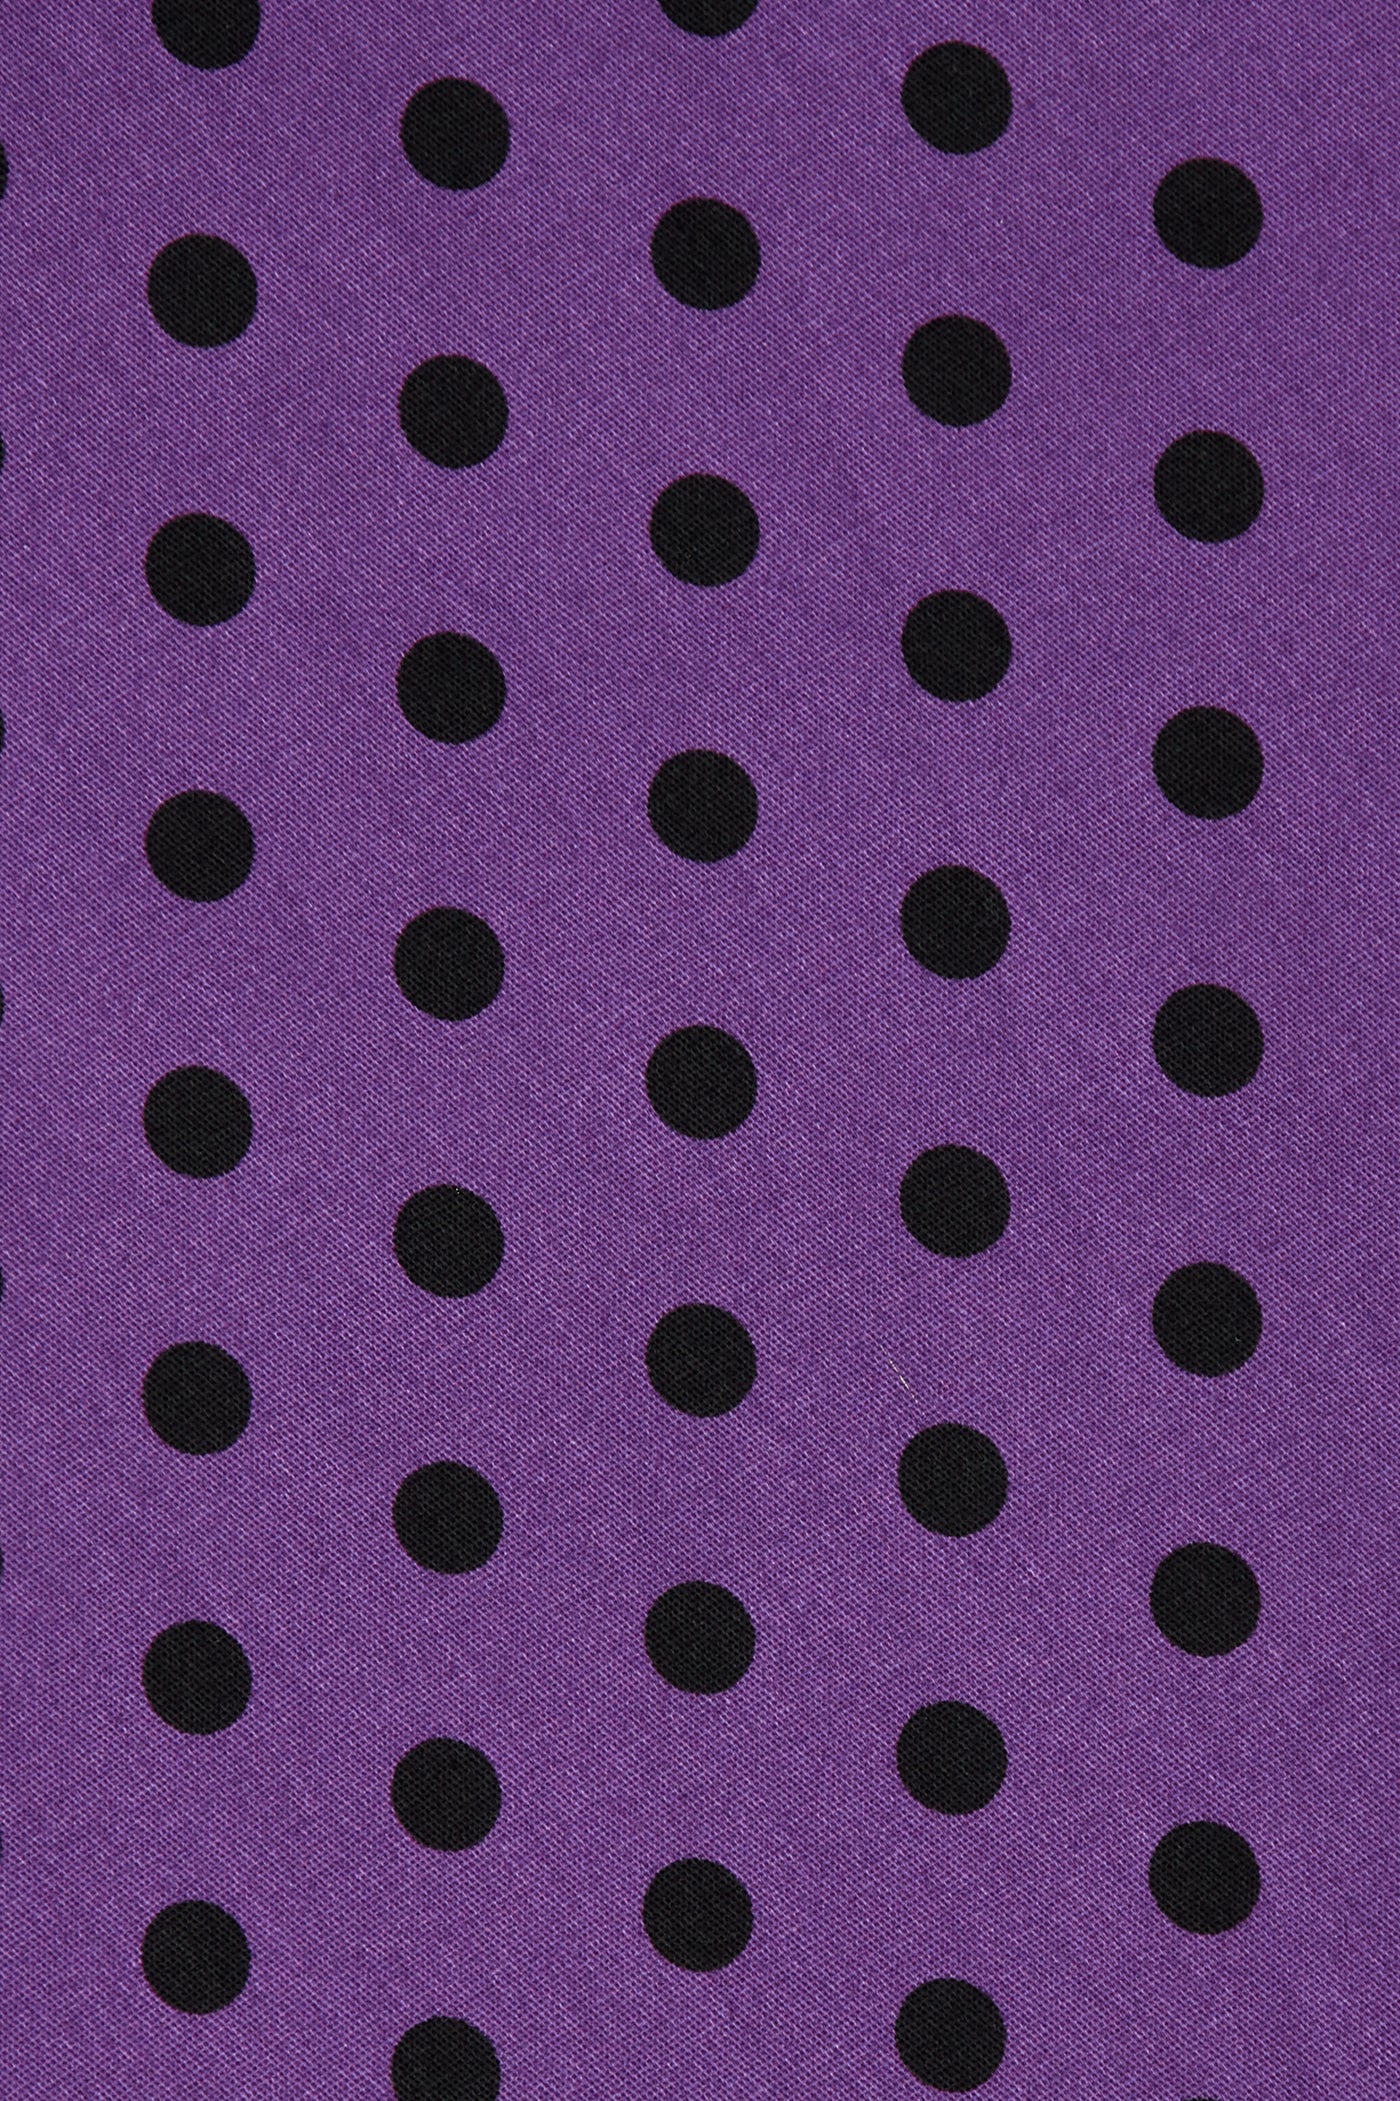 Purple and Black Polka Dot cotton close up fabric